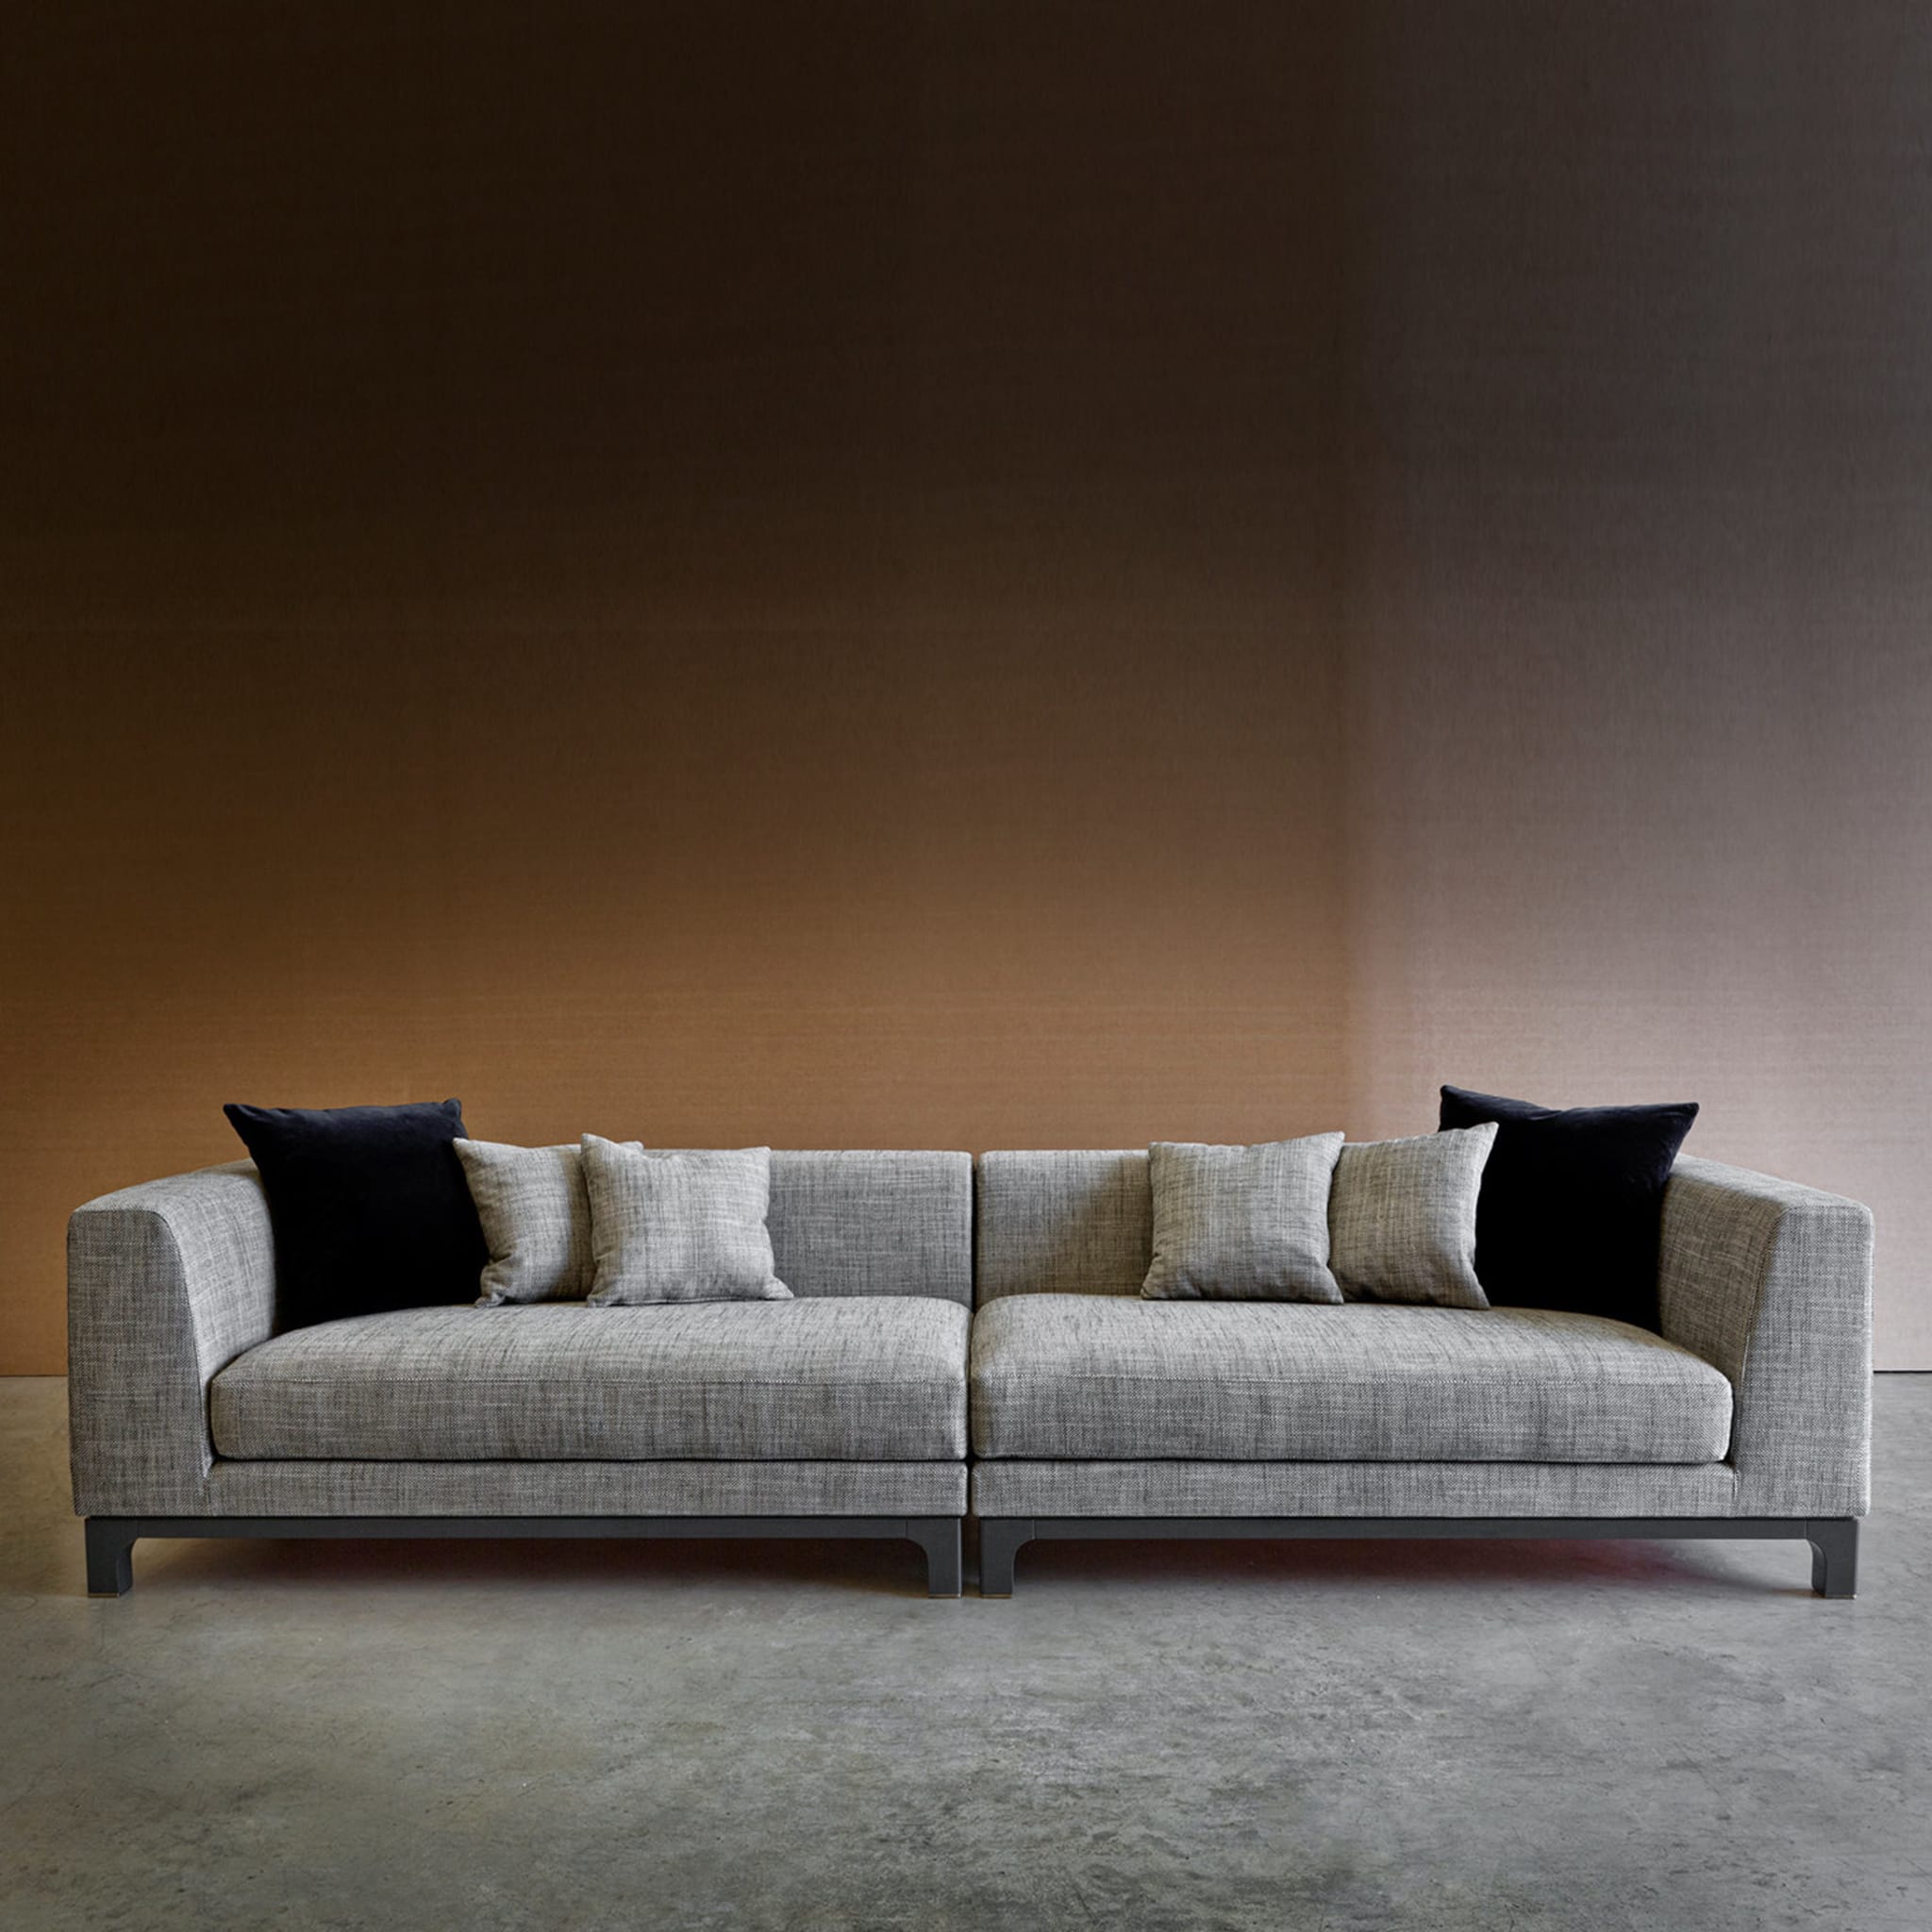 Cupido Large Gray Sofa by Bosco Fair - Alternative view 2